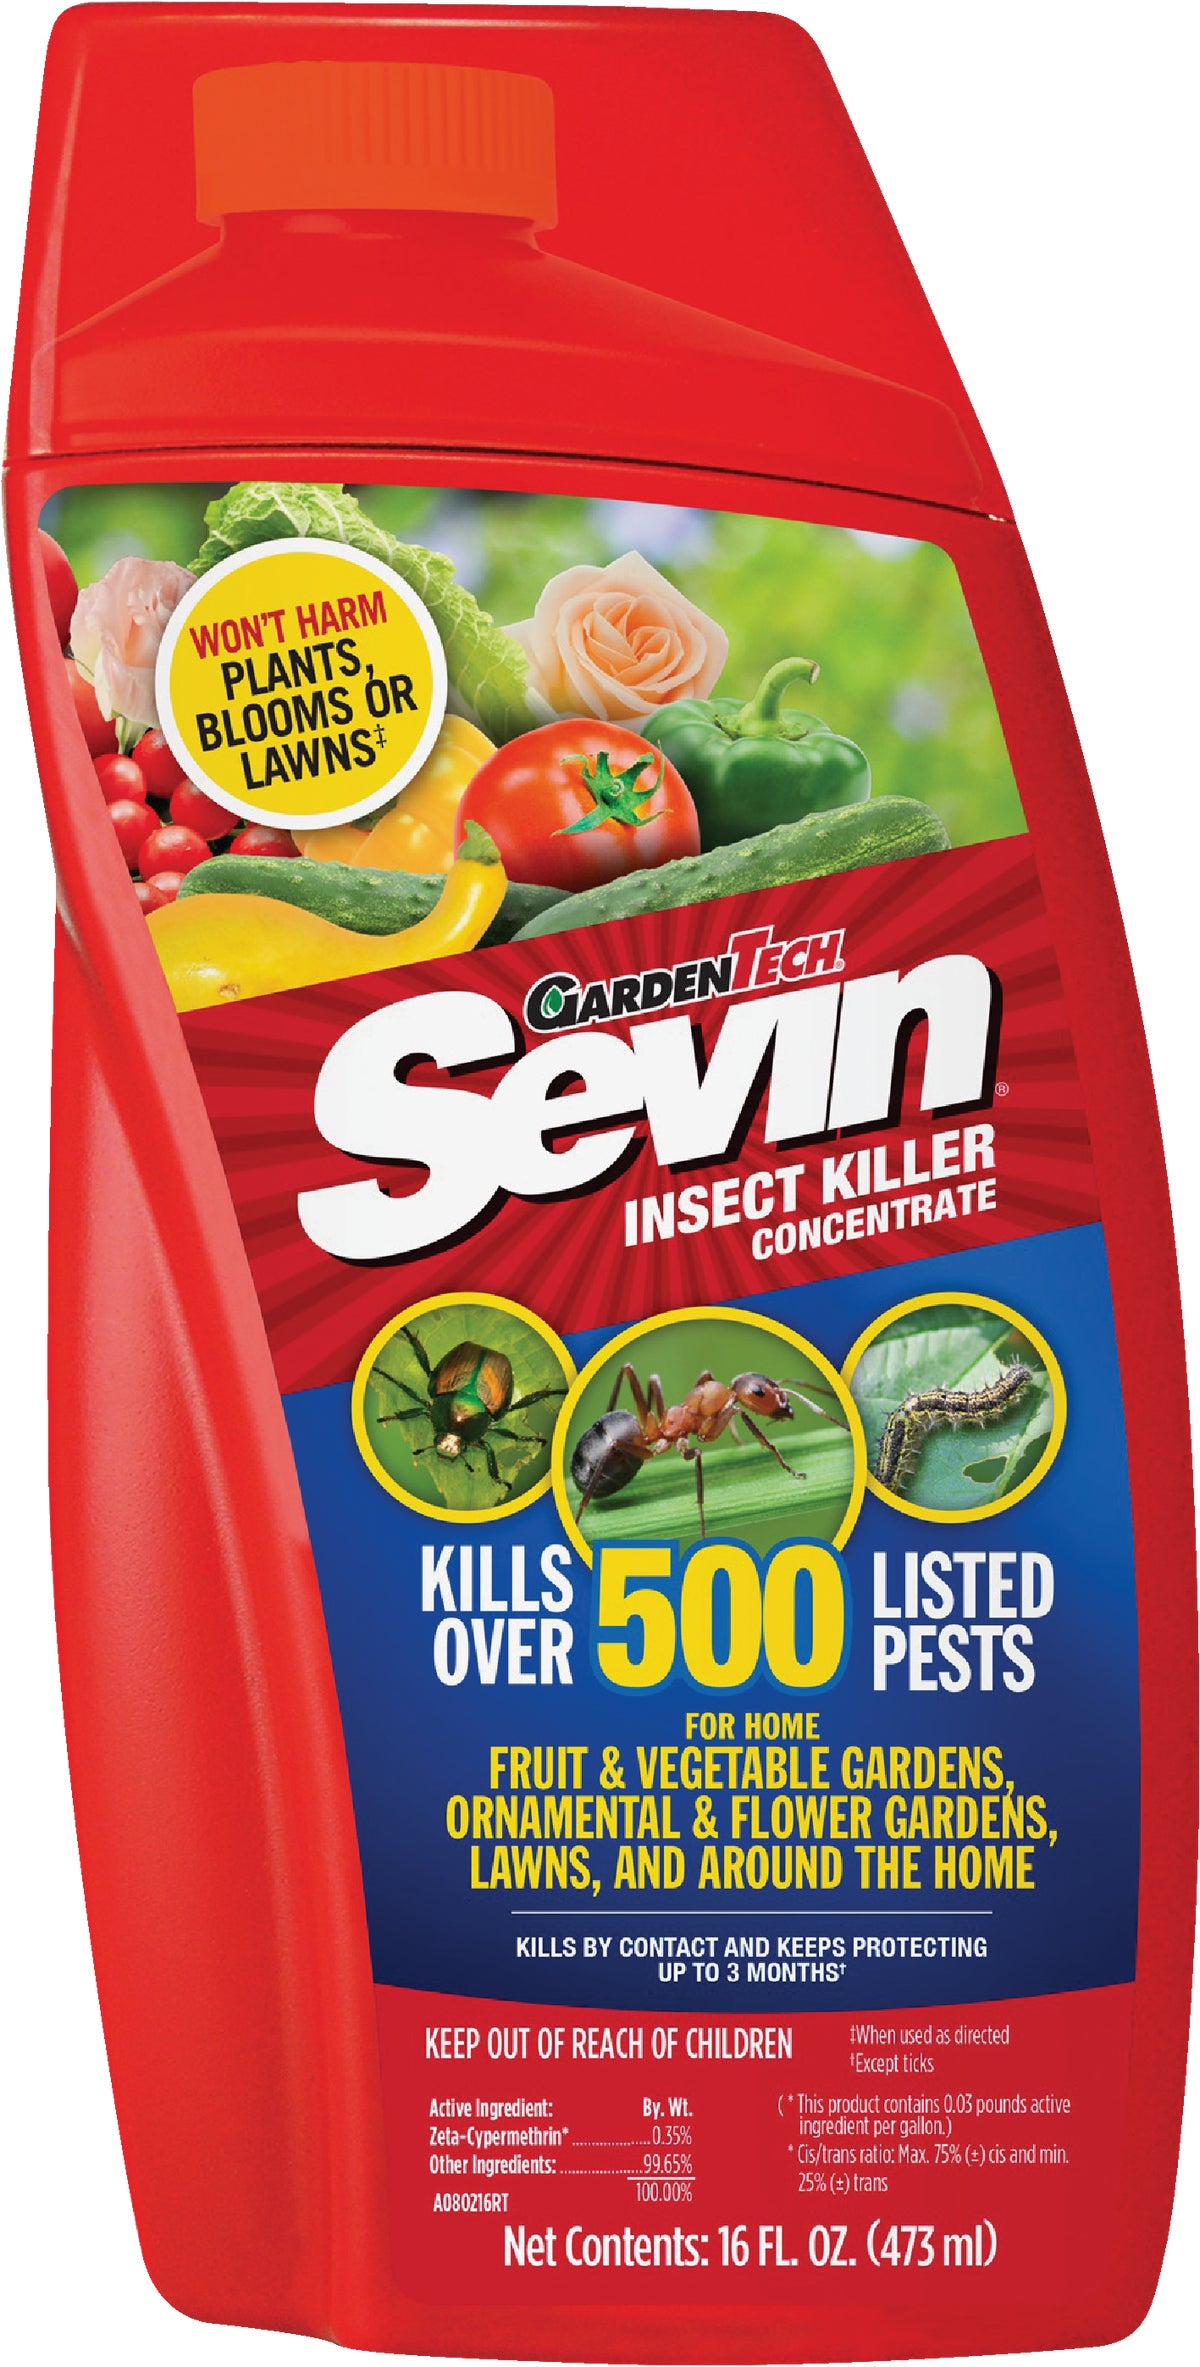 50+ Garden tech sevin insect killer ingredients ideas